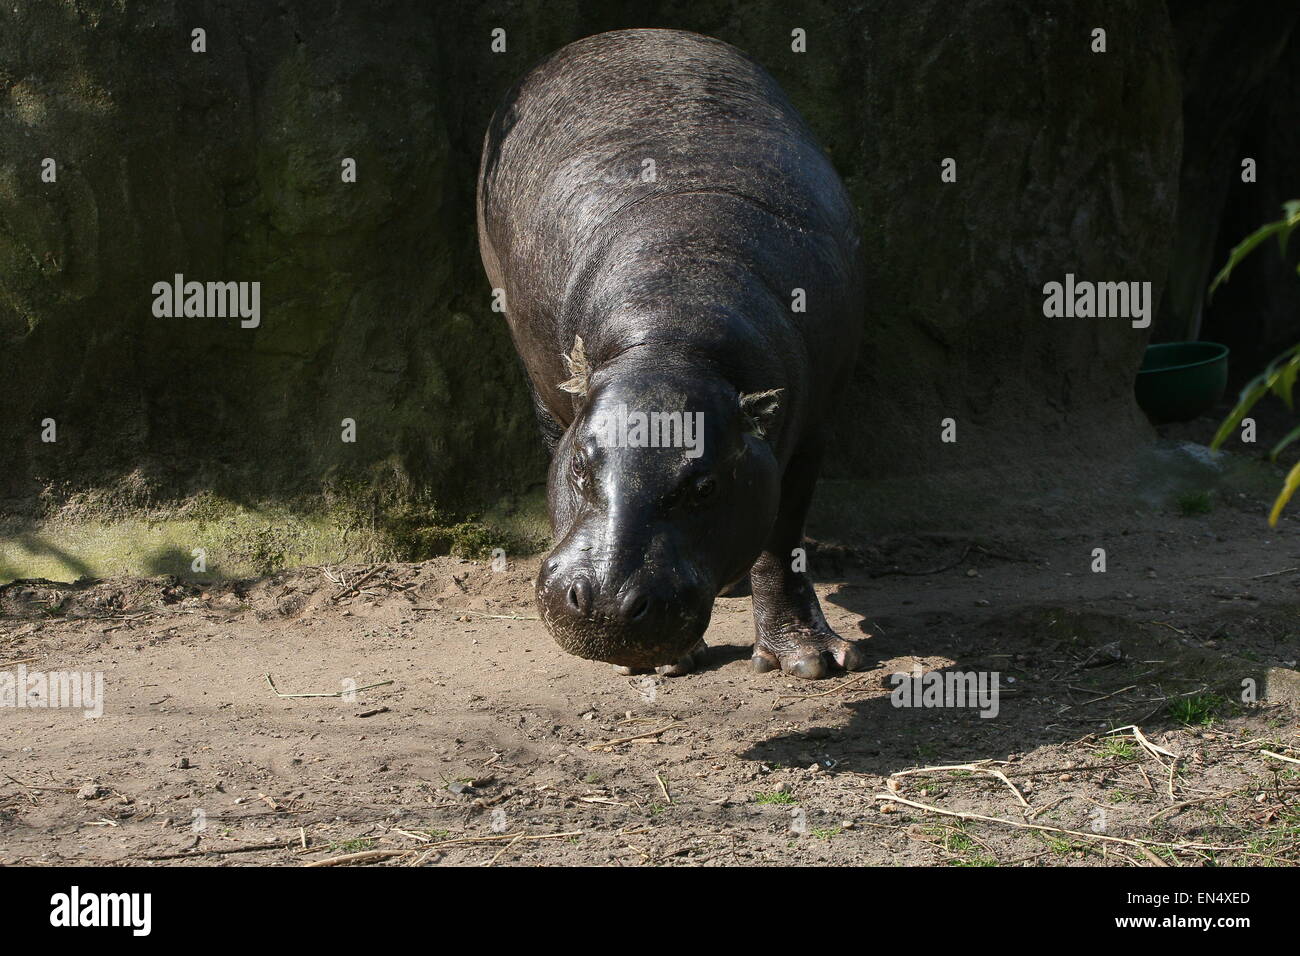 West African Pygmy hippopotamus (Hexaprotodon liberiensis, Choeropsis liberiensis) at Burger's Zoo, Arnhem, The Netherlands Stock Photo